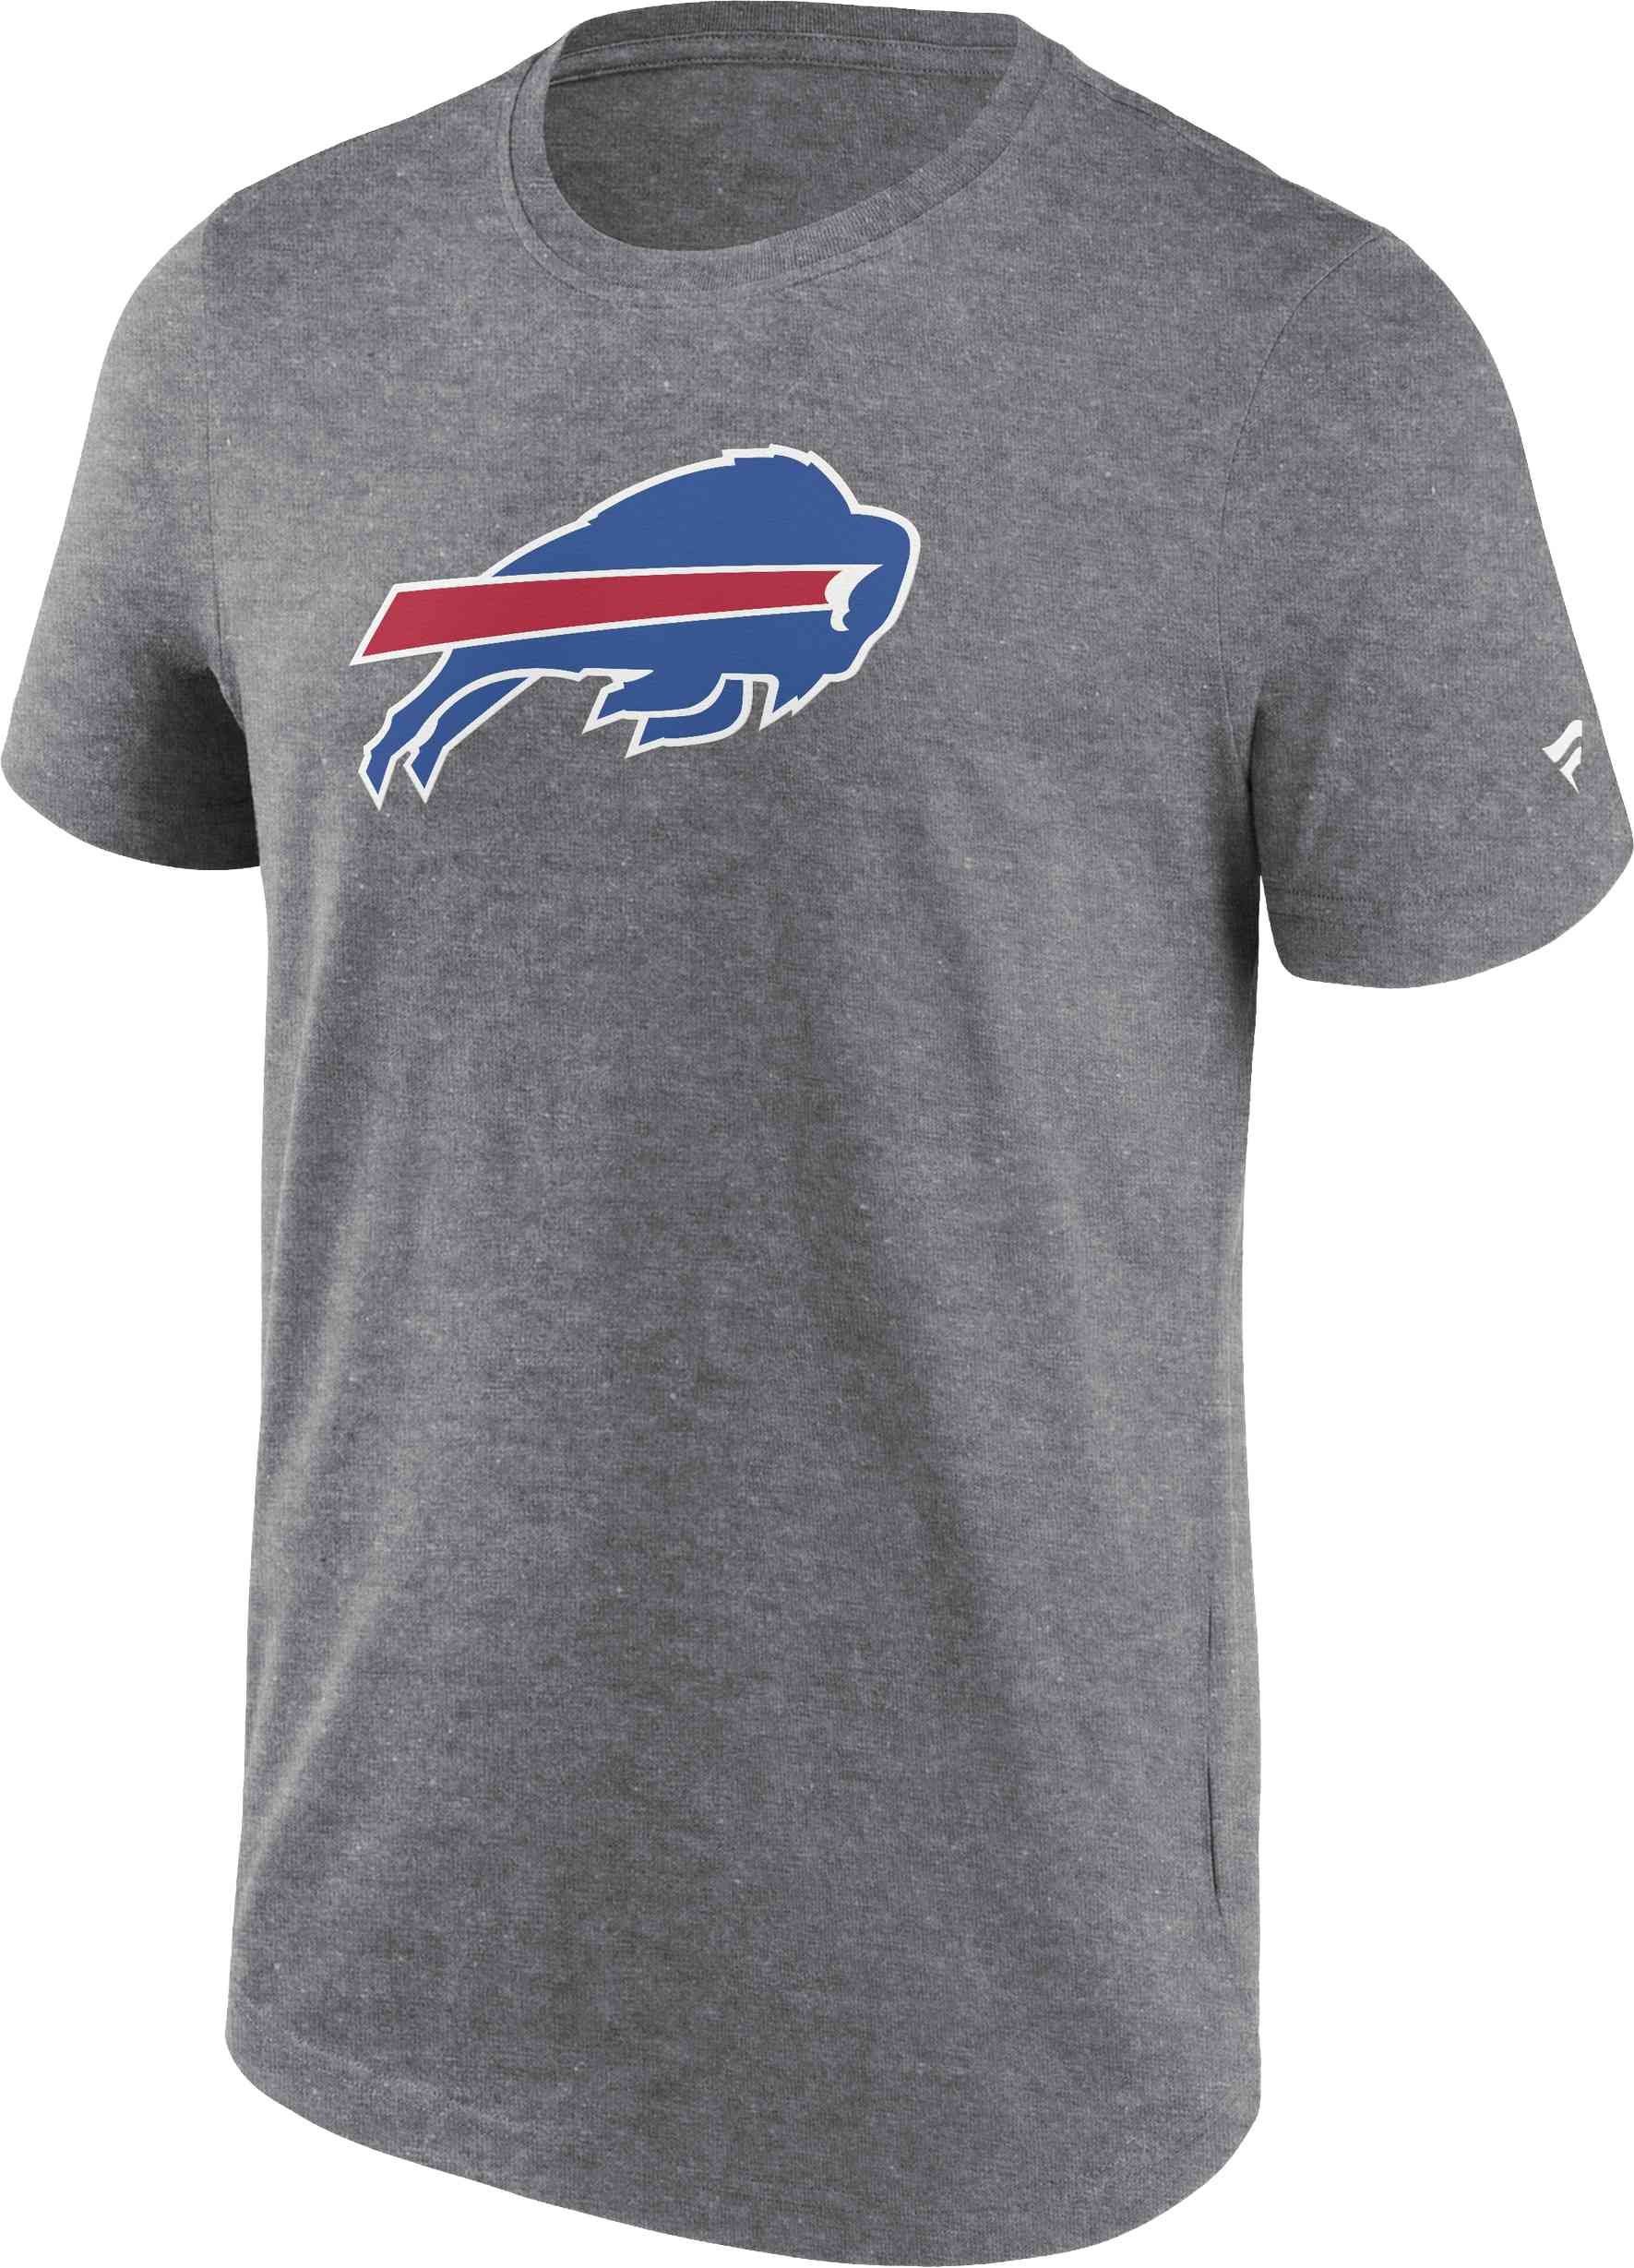 Logo Fanatics NFL Graphic Primary Buffalo T-Shirt Bills